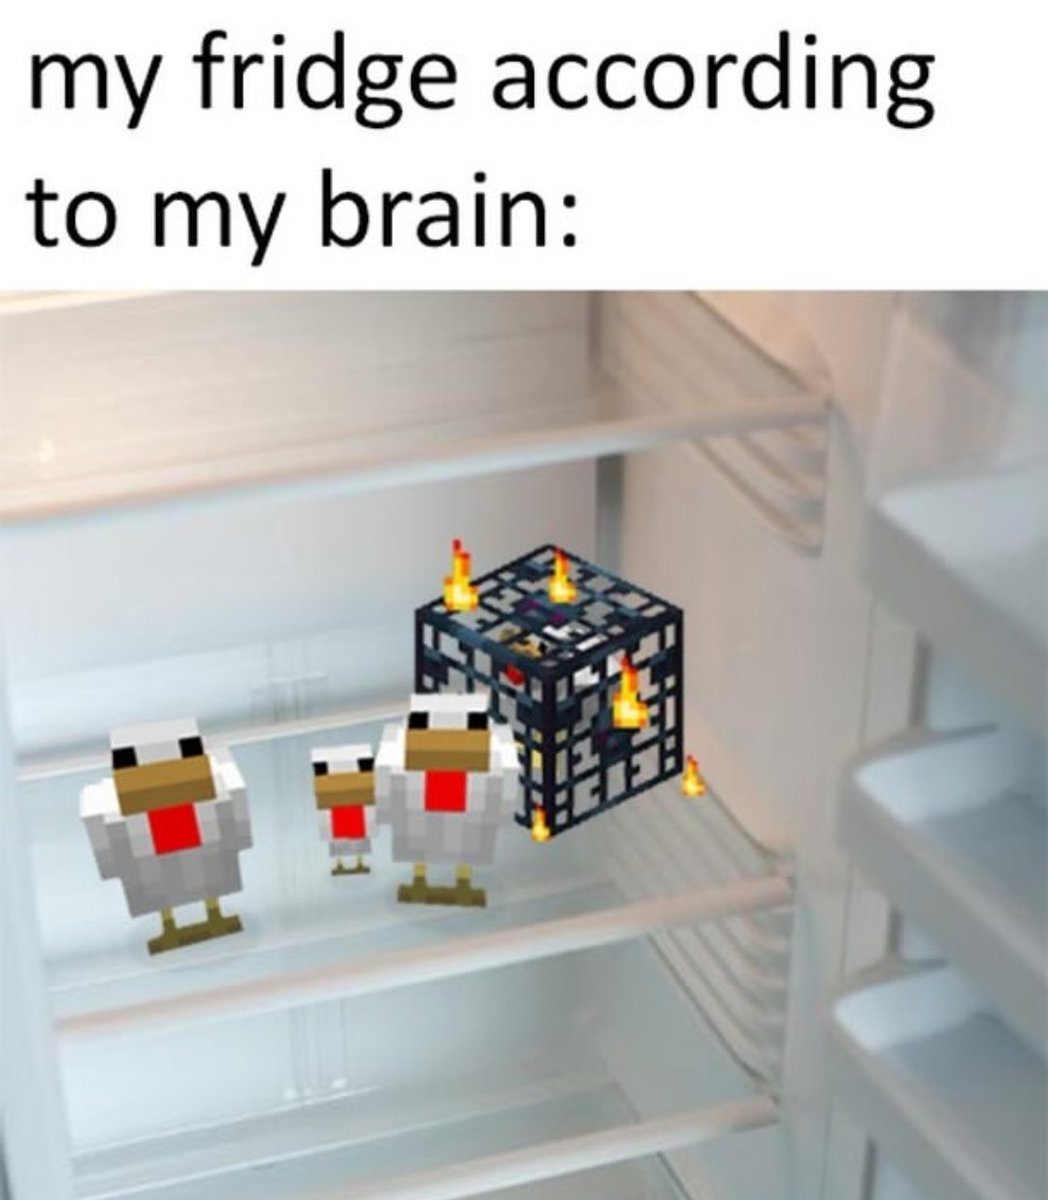 My brain's refrigerator